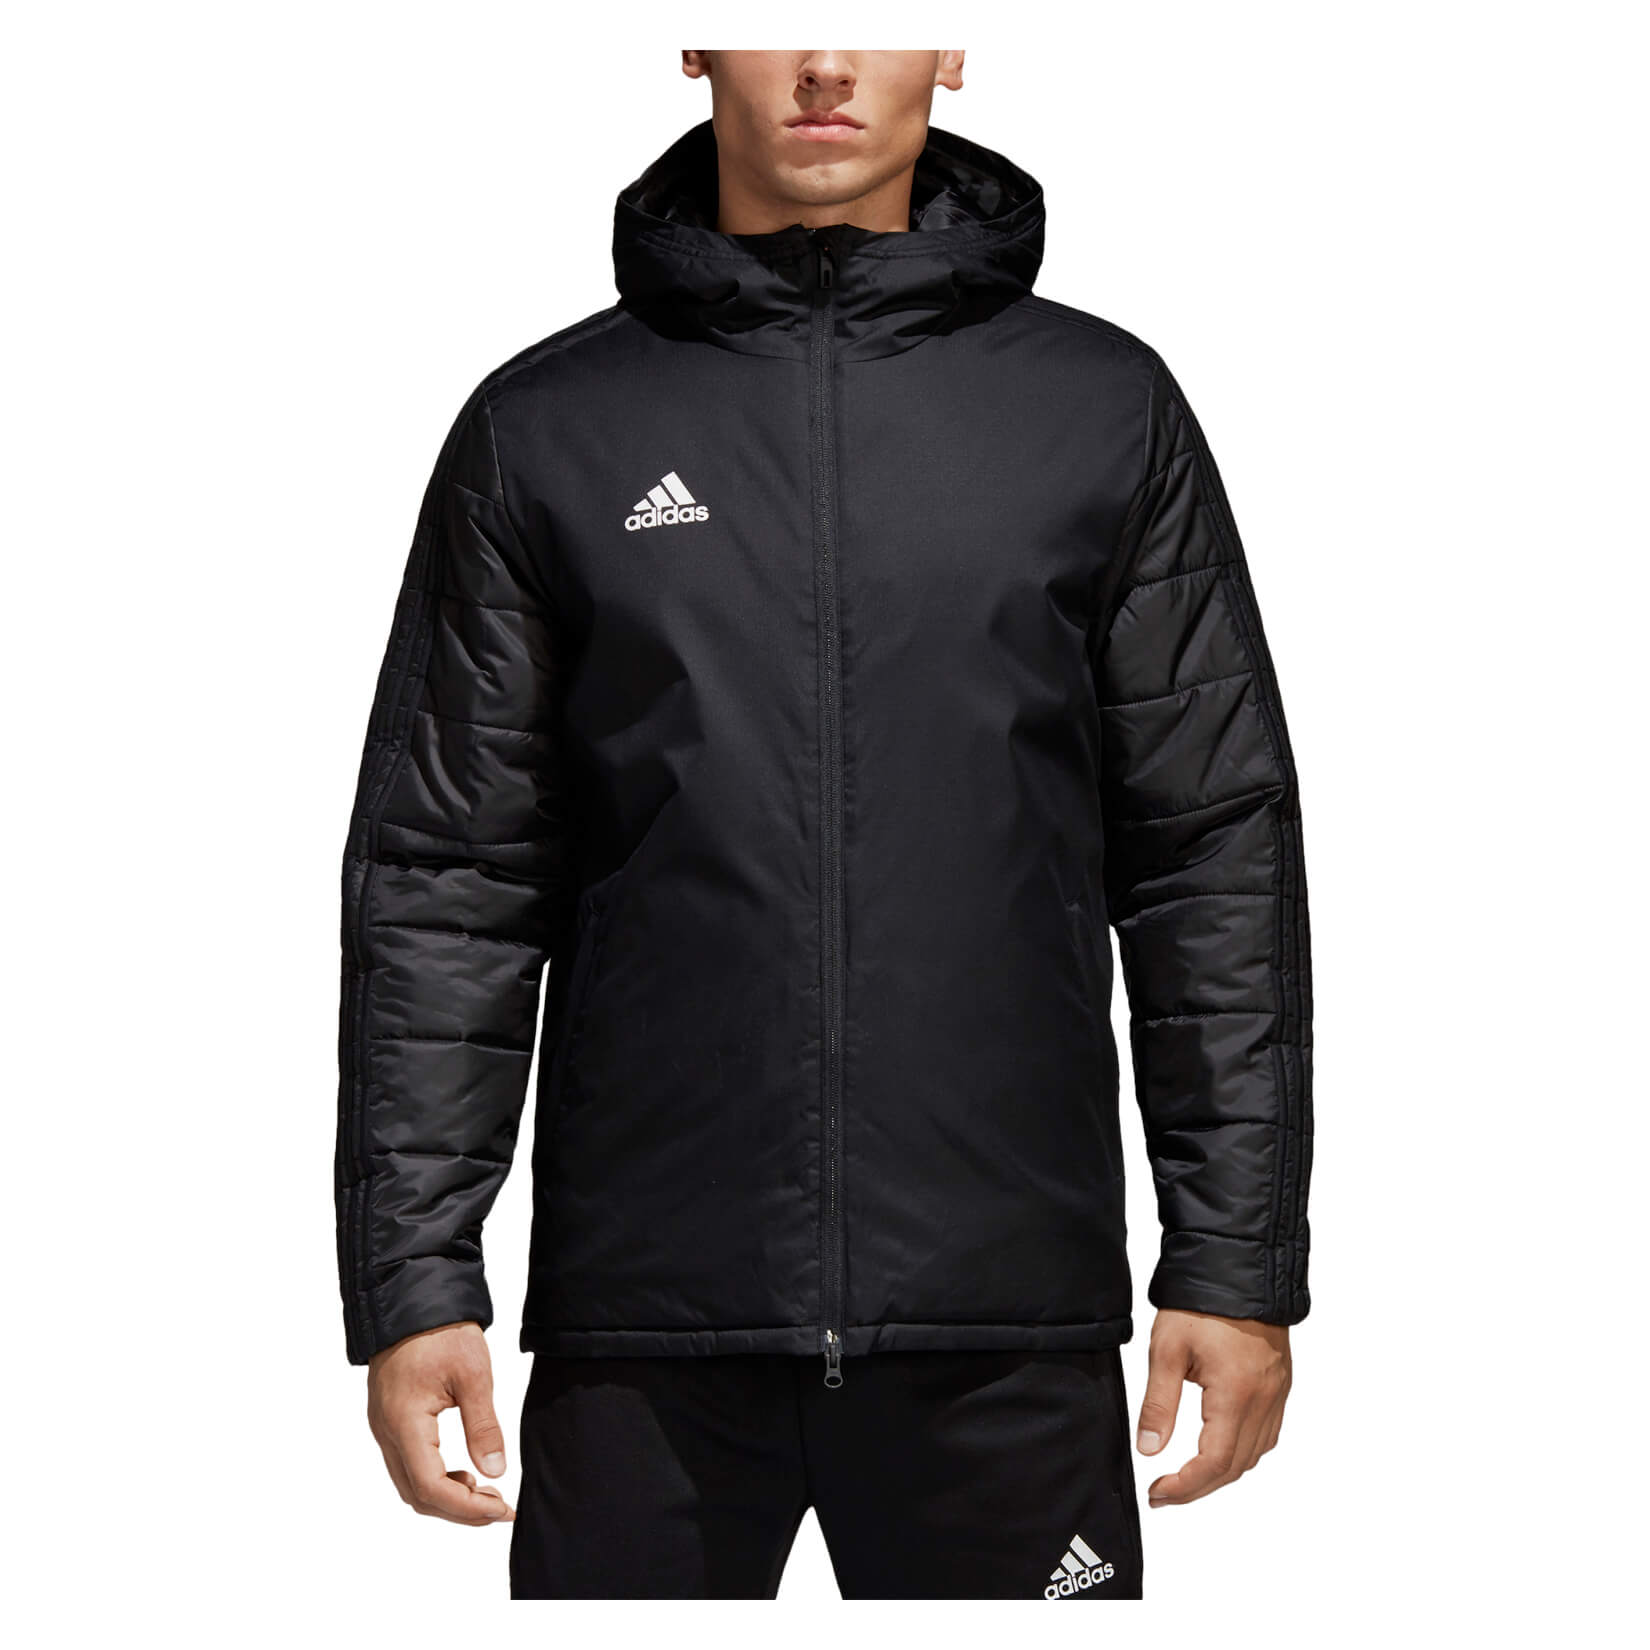 Adidas Winter Jacket 18